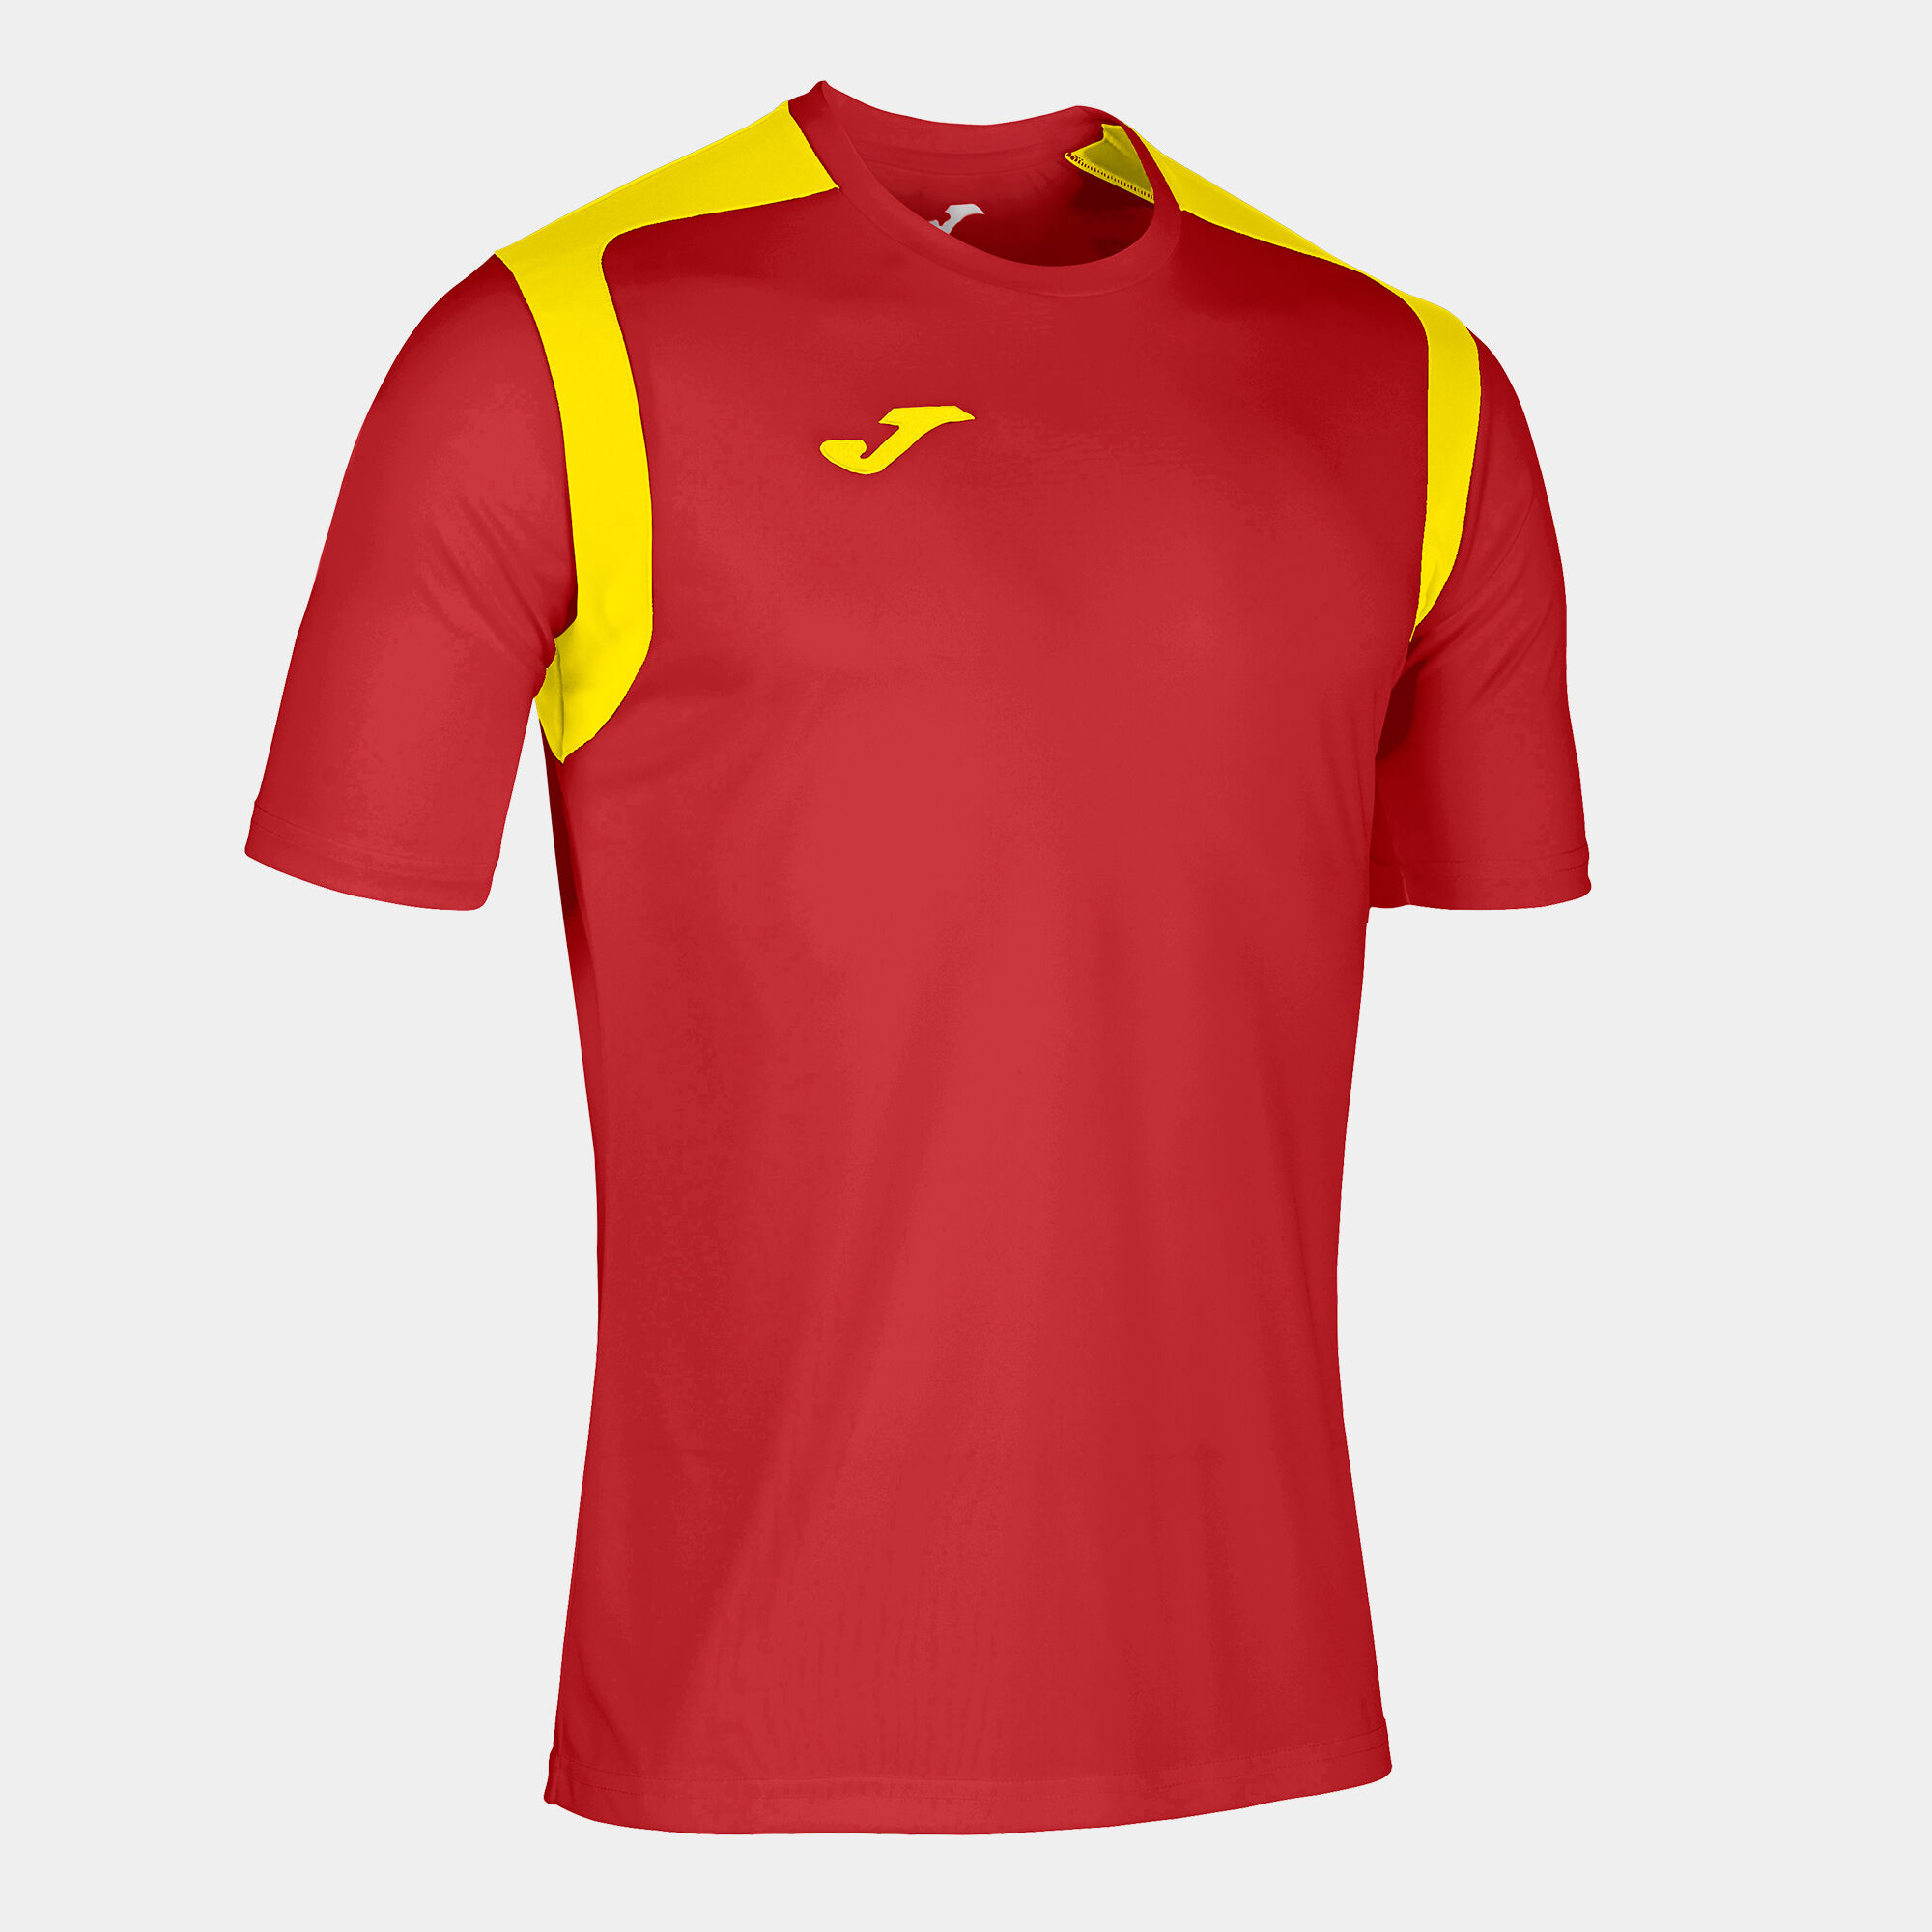 Shirt short sleeve man Championship V red yellow